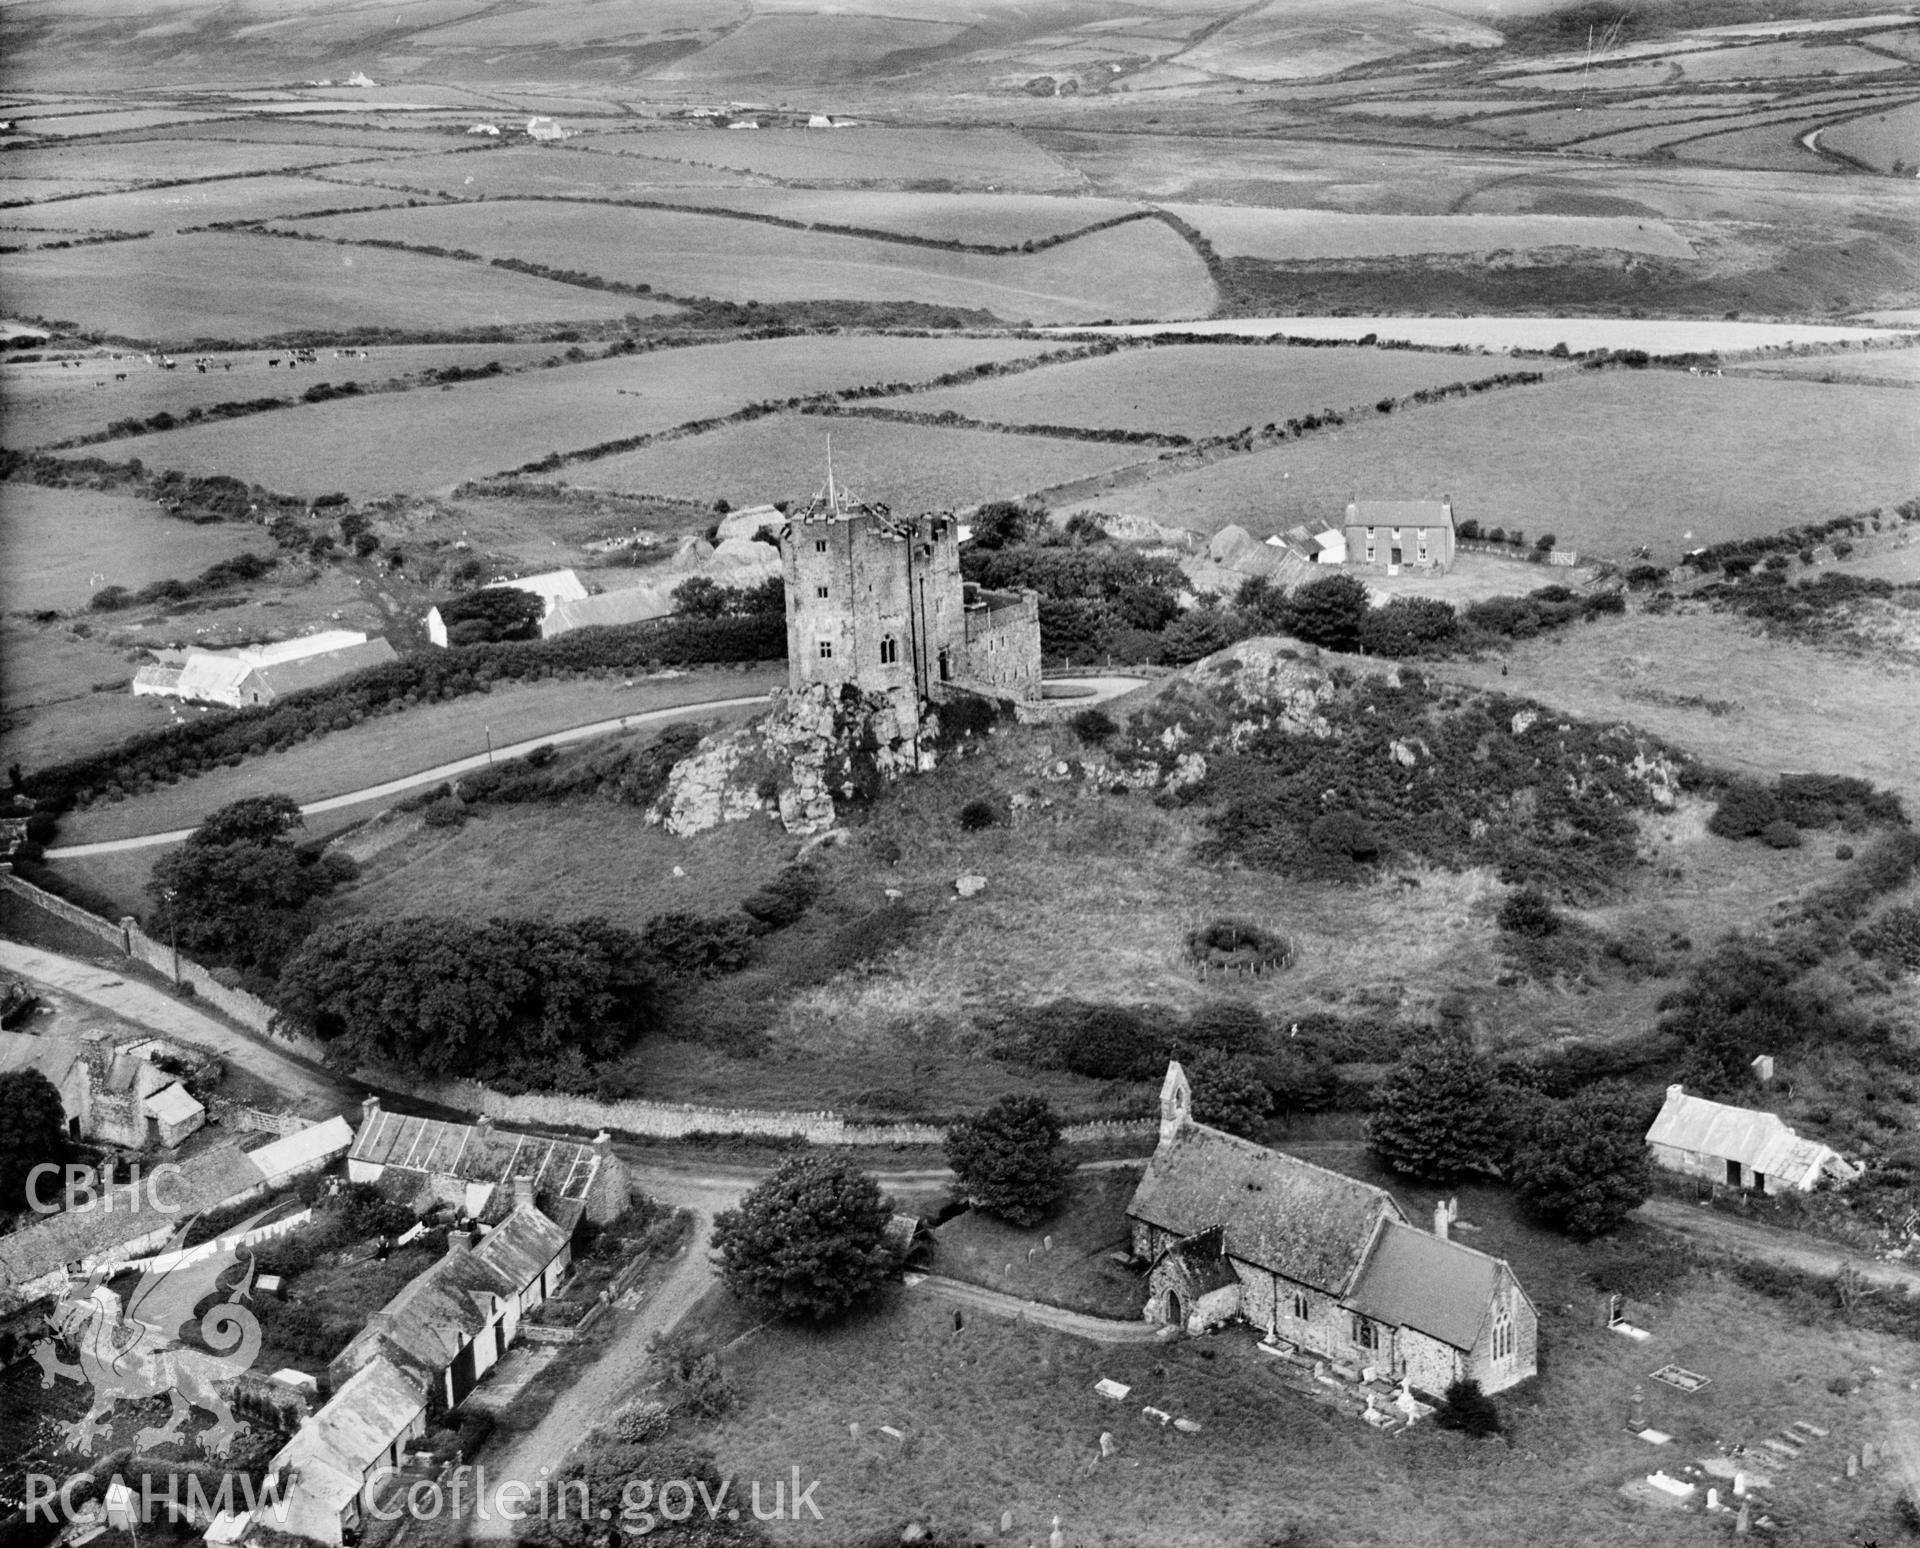 View of Roch Castle and Castle Farm, Roch, Pembrokeshire, oblique aerial view. 5?x4? black and white glass plate negative.